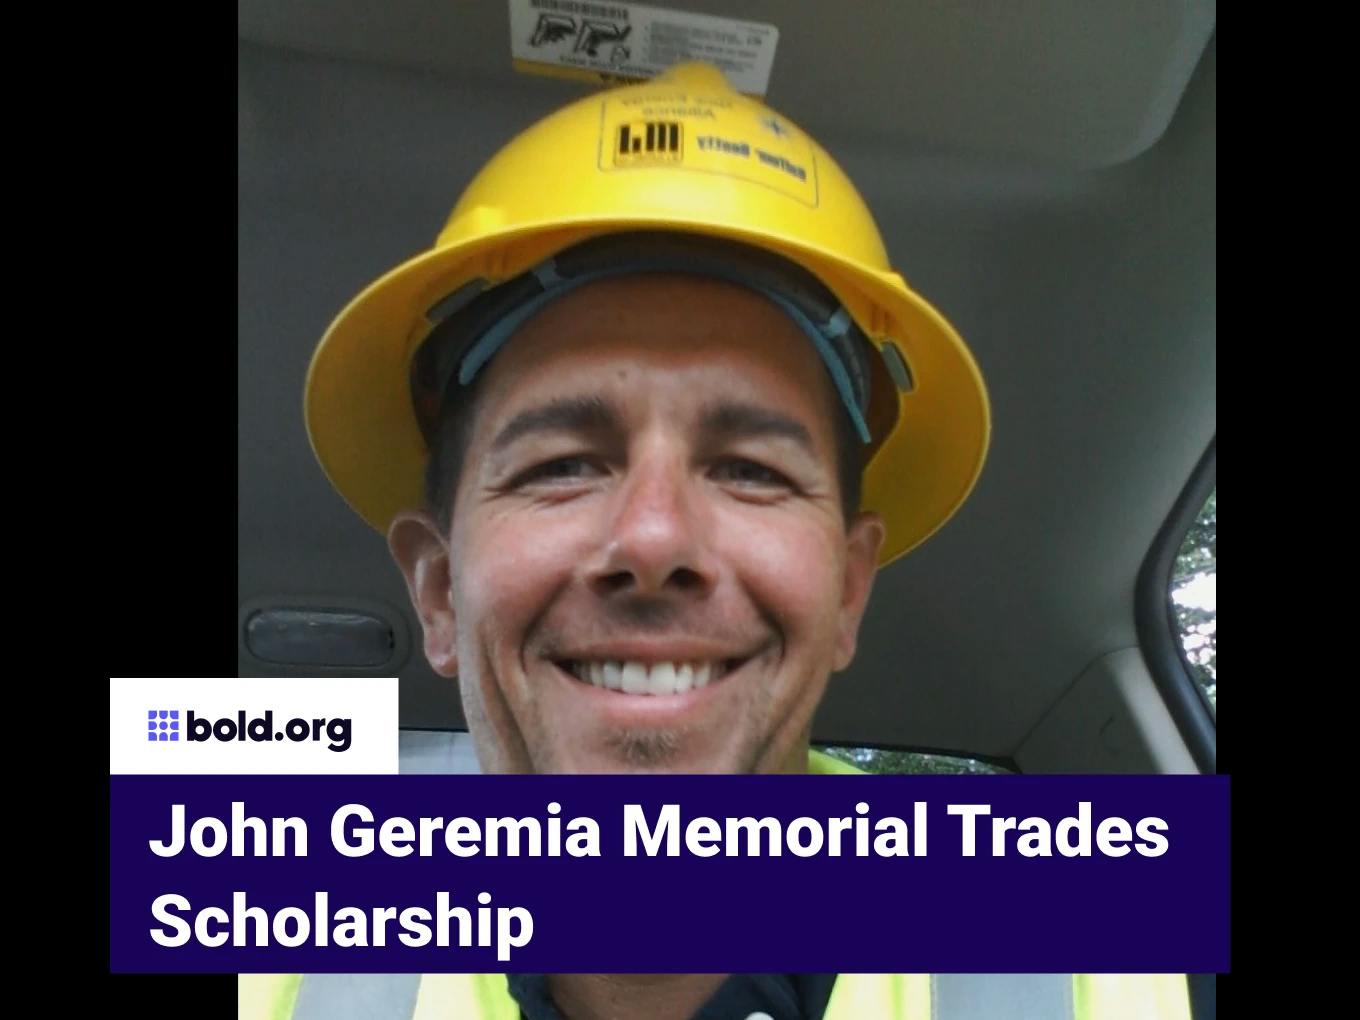 John Geremia Memorial Trades Scholarship